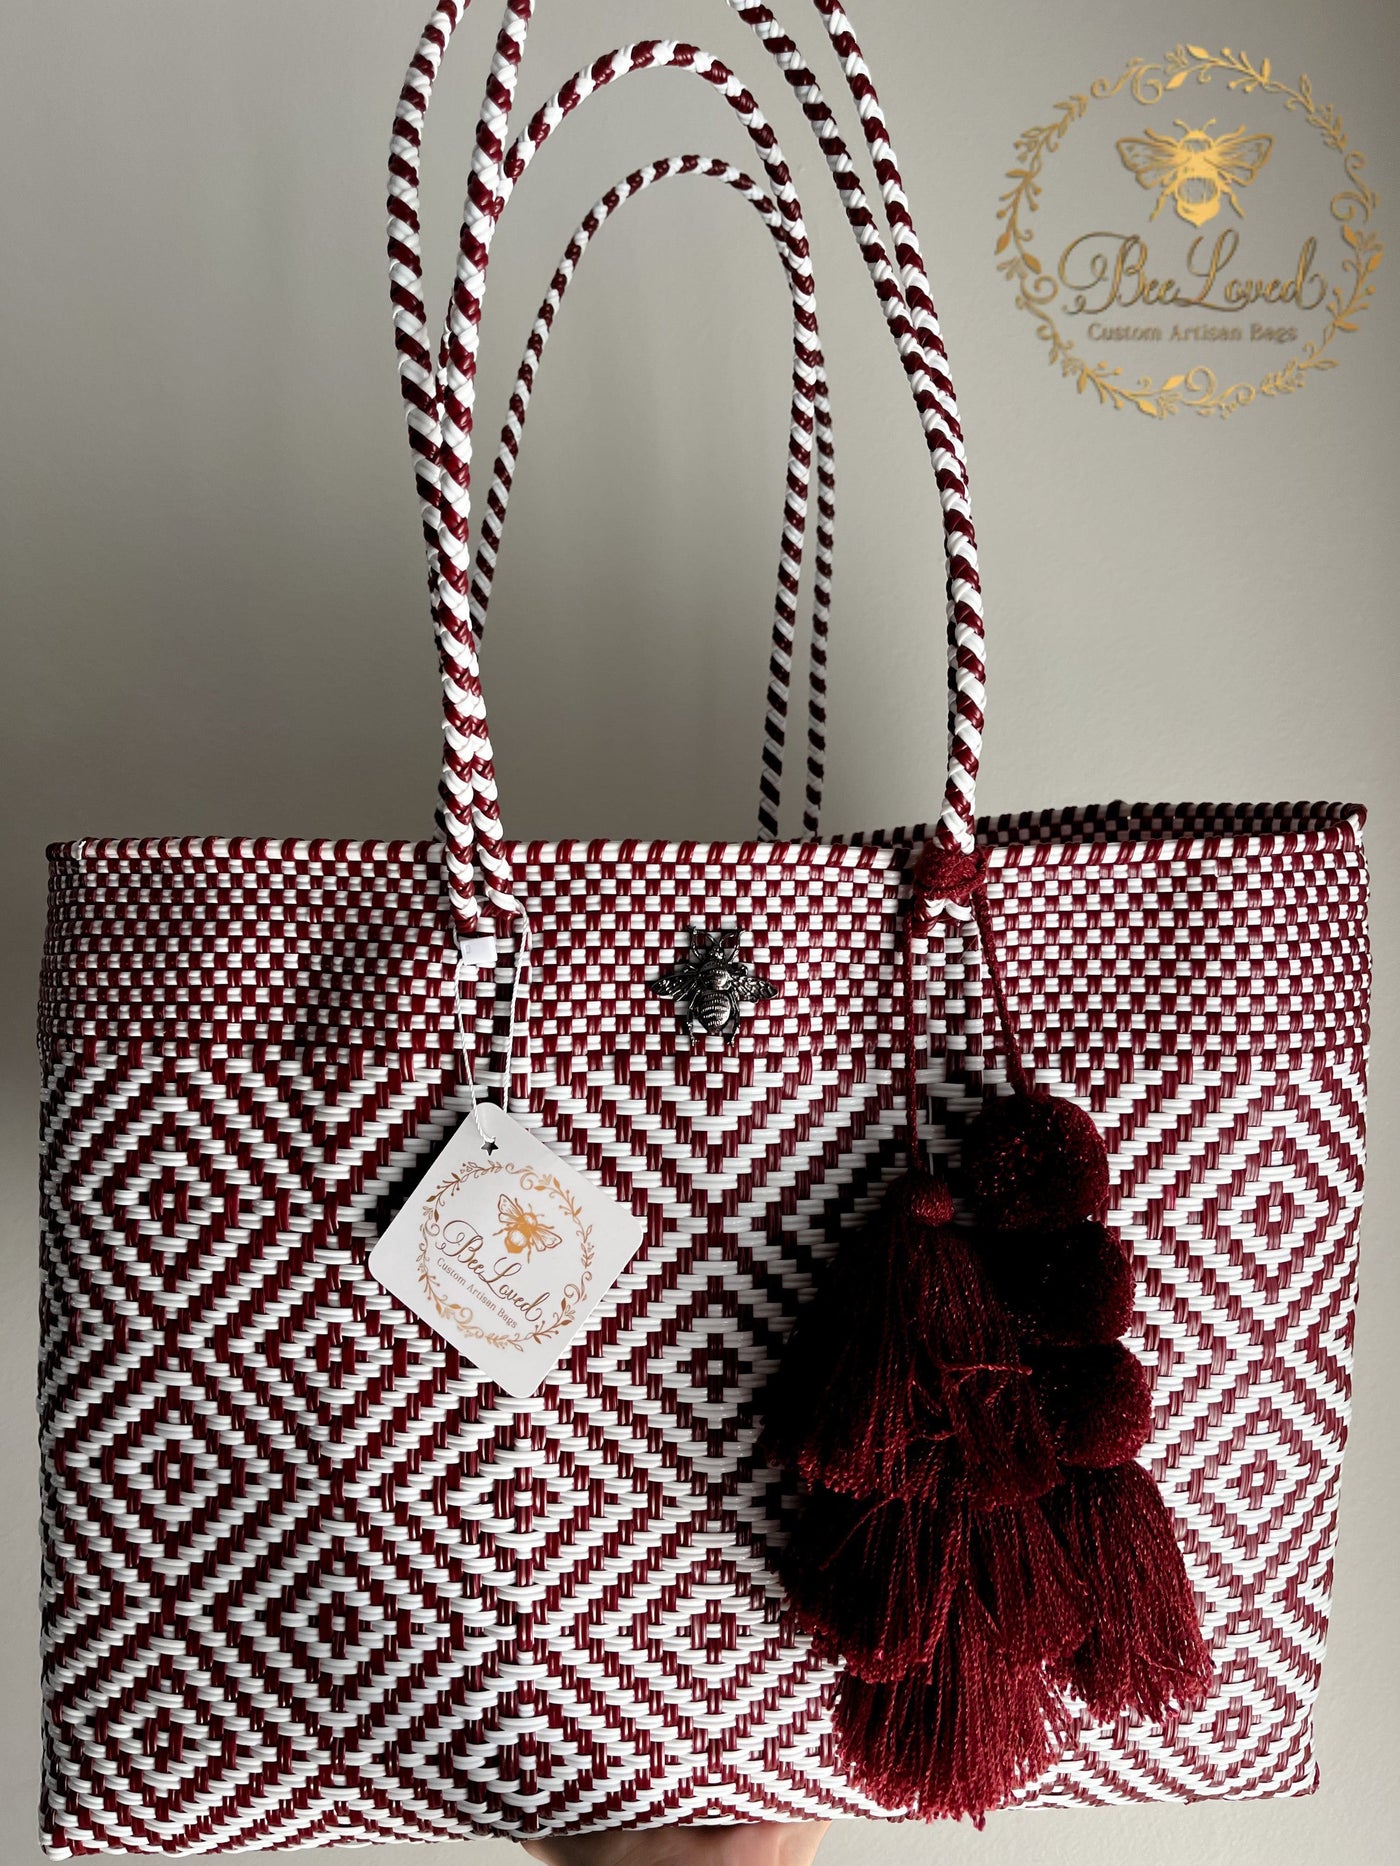 BeeLoved Custom Artisan Bags and Gifts Handbags Medium Halle Beech Bag